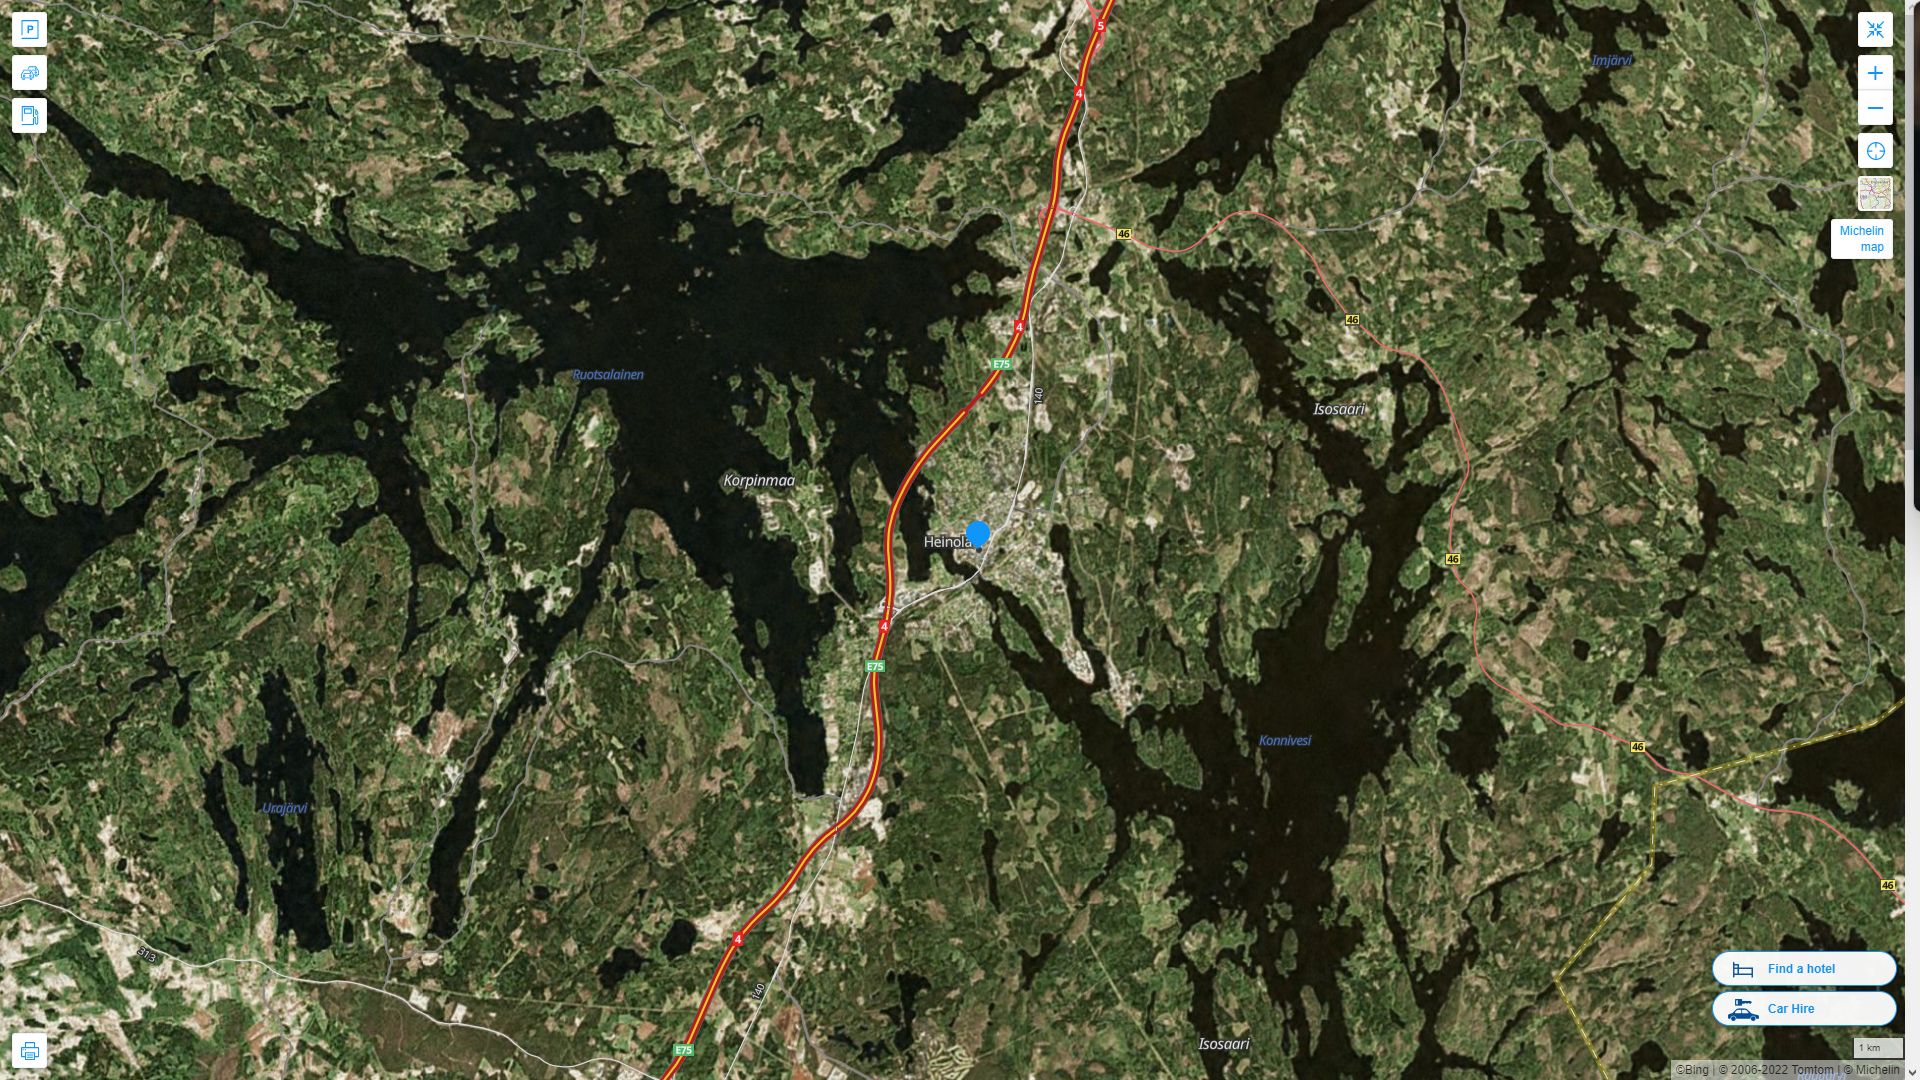 Heinola Finlande Autoroute et carte routiere avec vue satellite